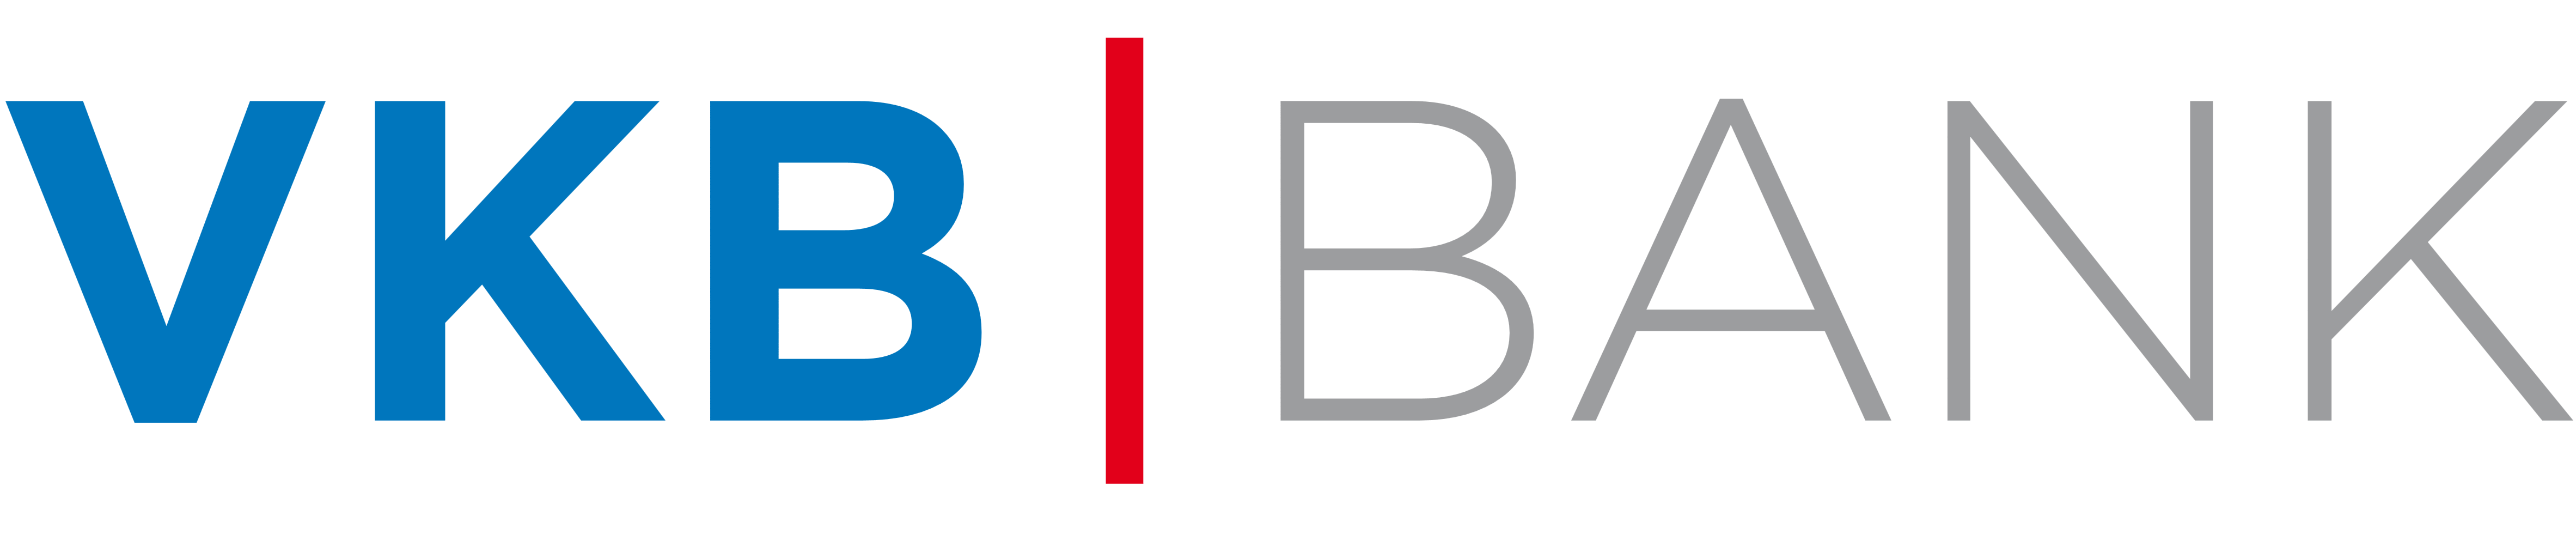 VKB Bank logo, logotype